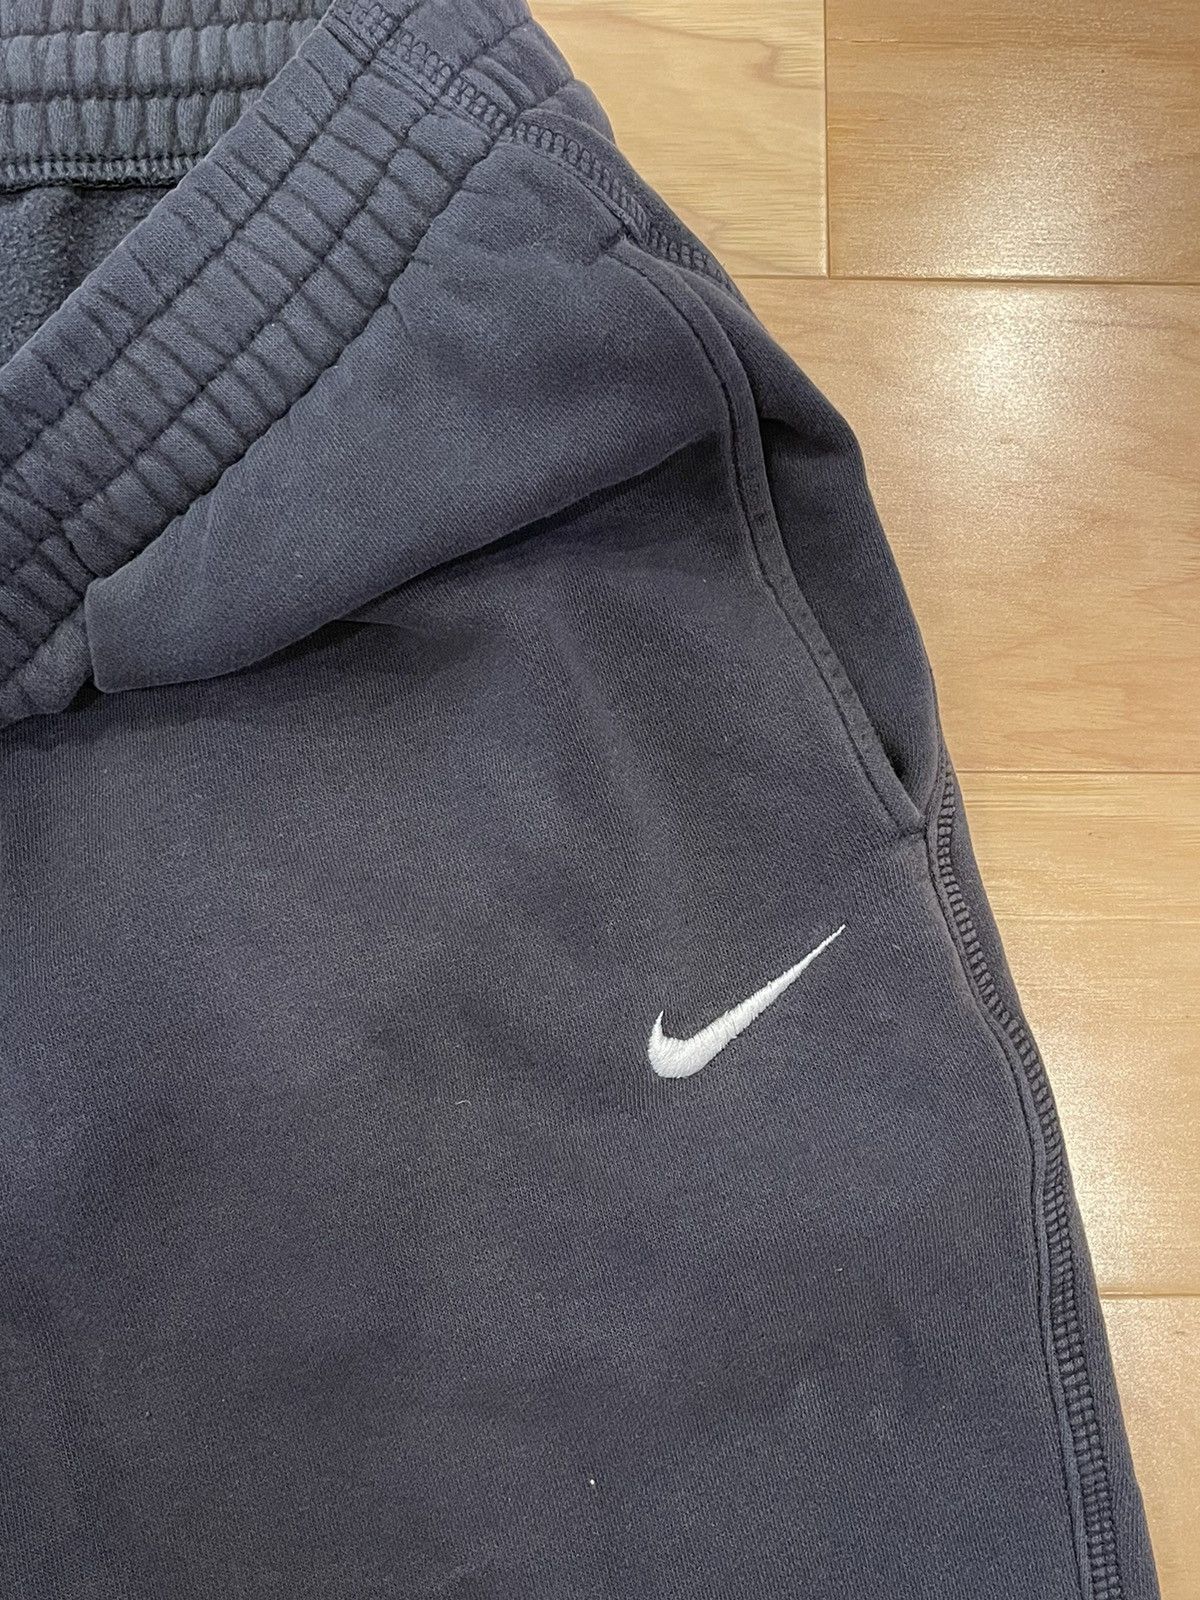 Nike Nike sweatpants Size US 37 - 3 Thumbnail